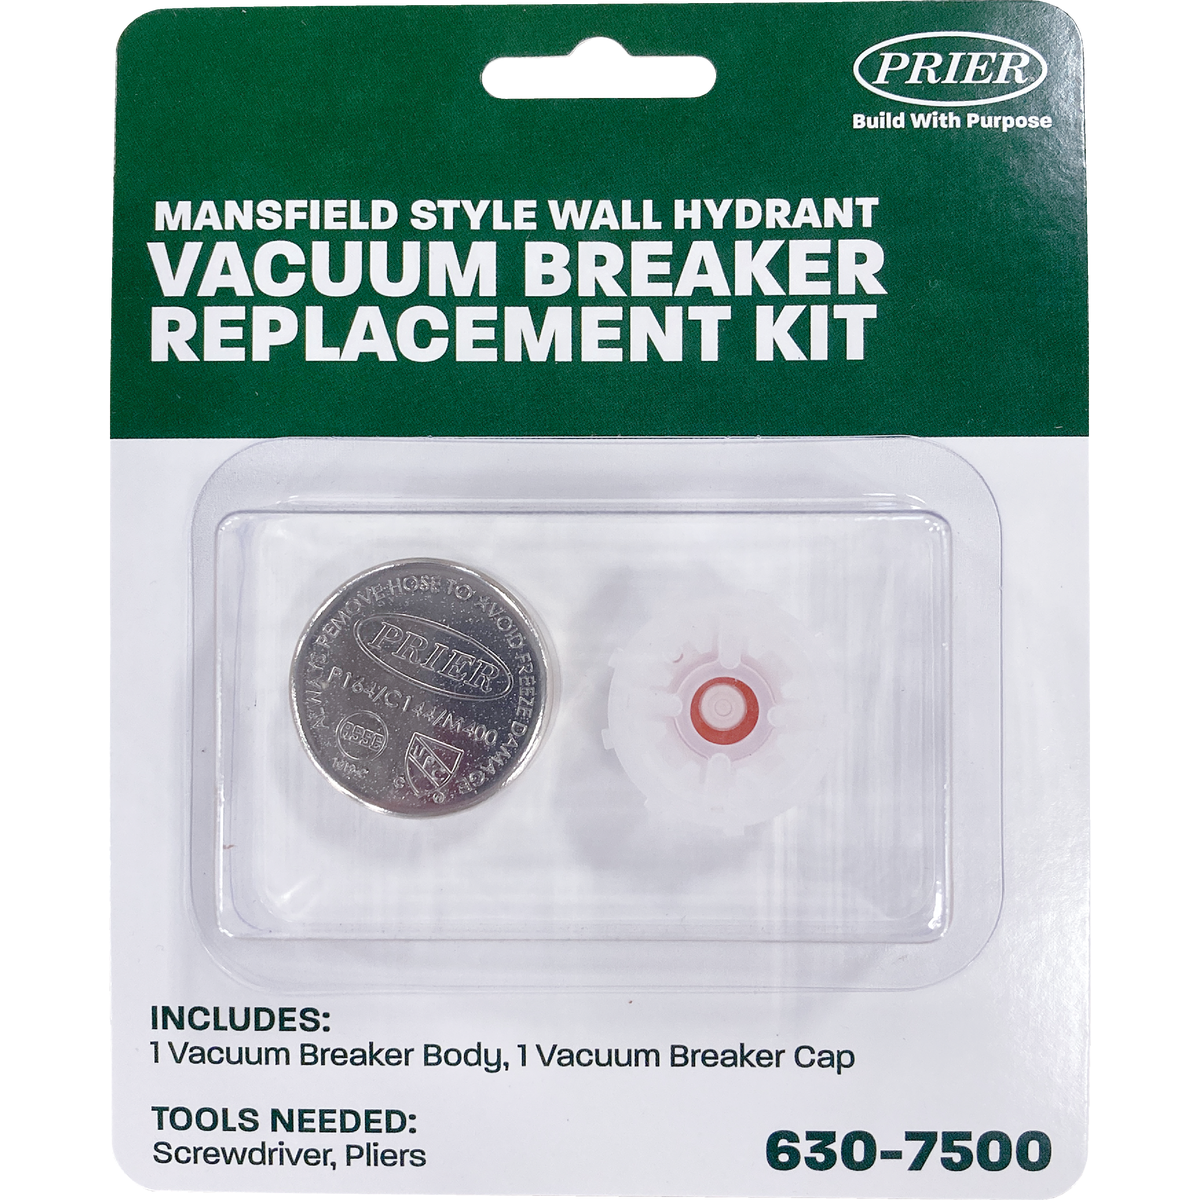 Vacuum Breaker